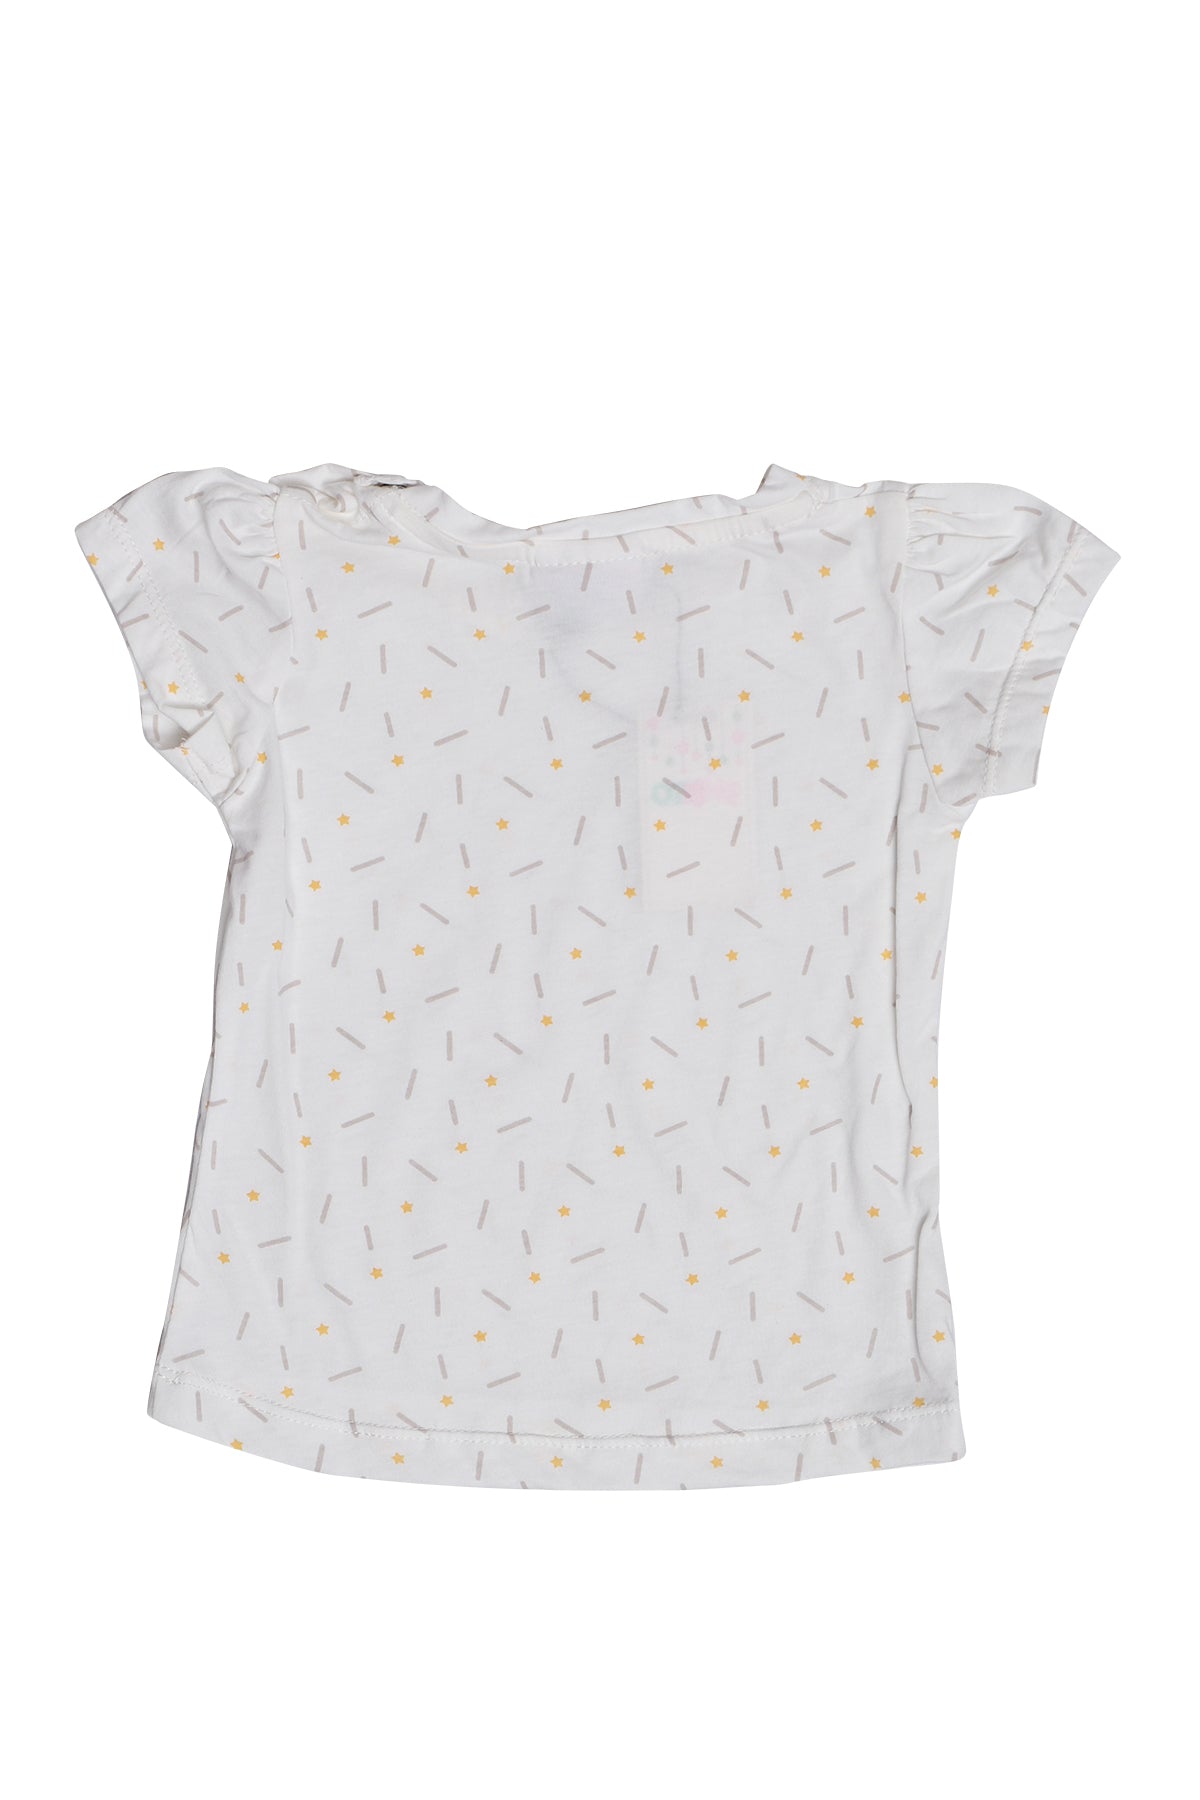 Ozone Baby Girls Short Sleeve Casual T-Shirt